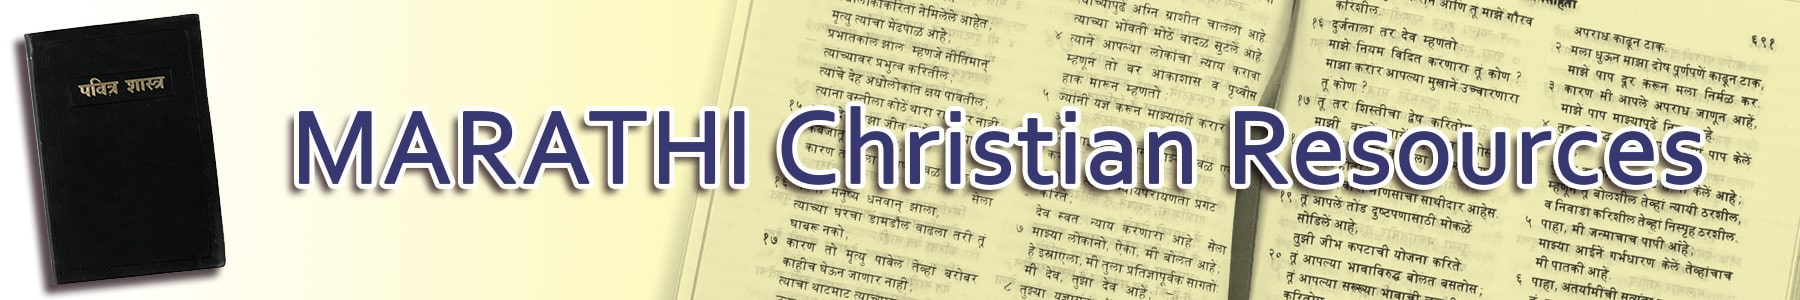 Marathi Christian Resources